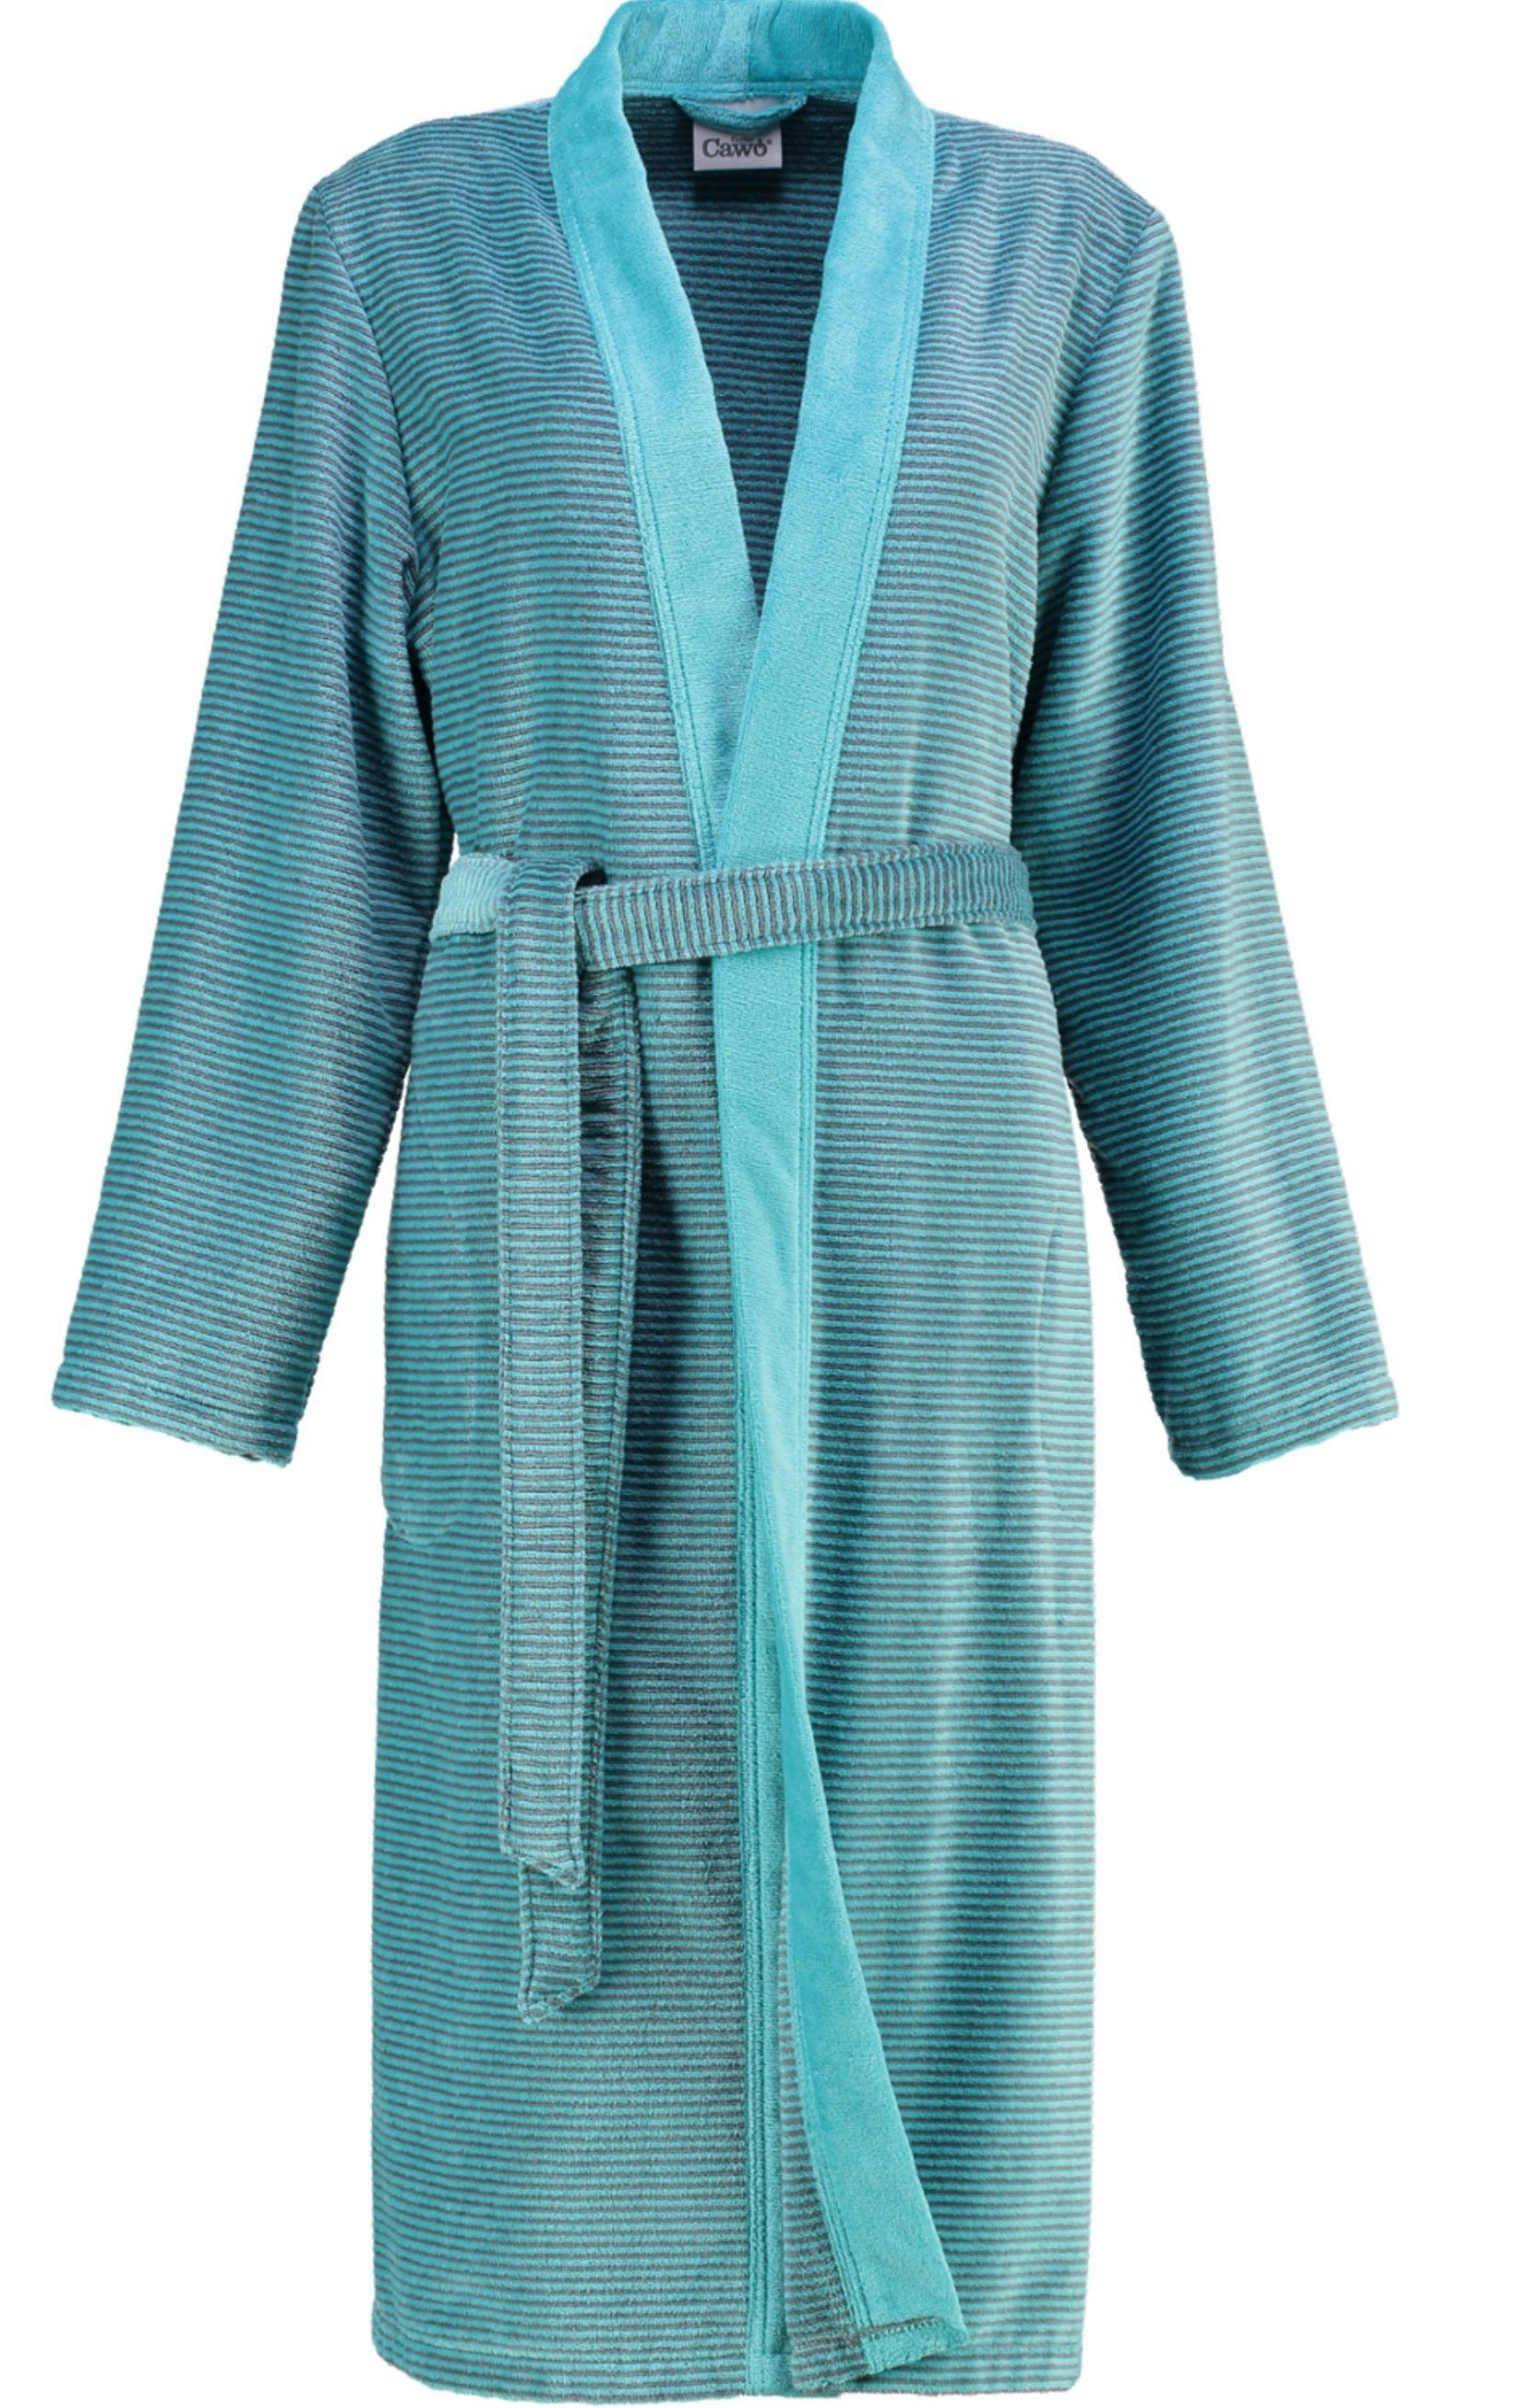 Cawö Damenbademantel, Langform, Baumwolle, Kimono-Kragen, Gürtel, Kimono Form türkis